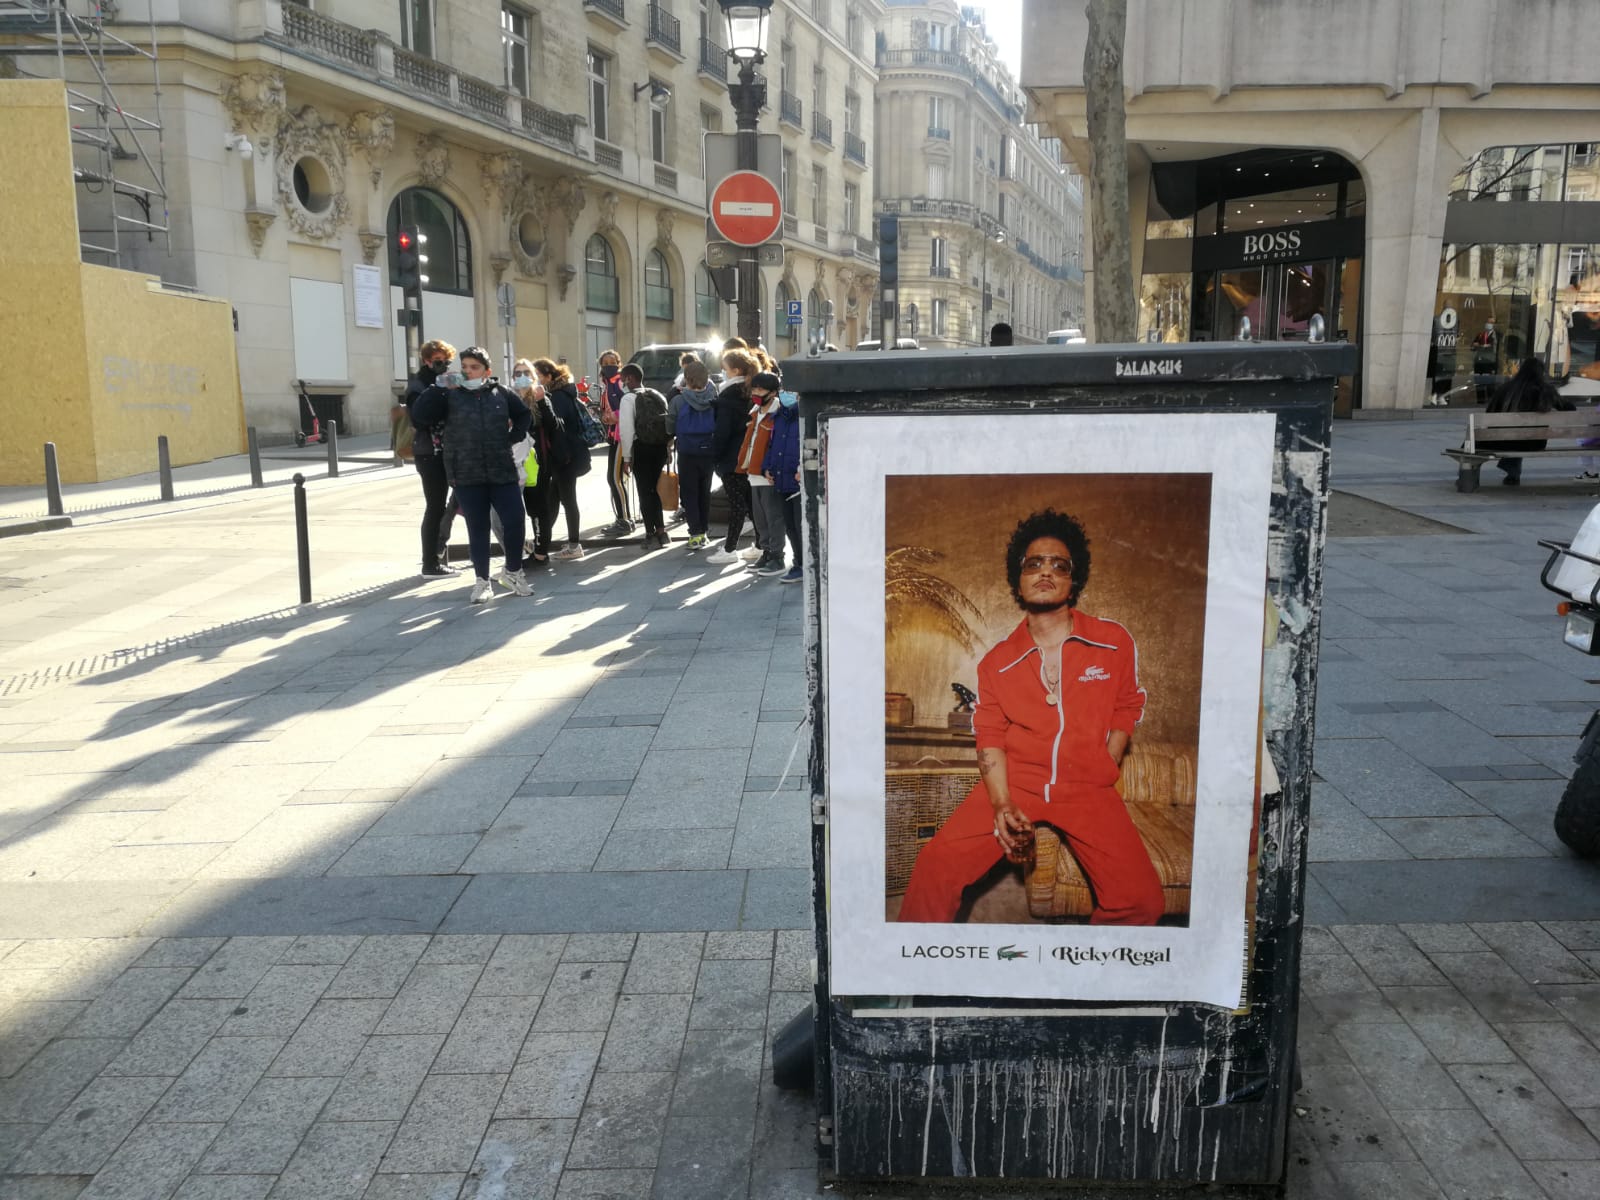 lacoste-affichage-sauvage-tapage-medias-street-guerilla-marketing-campagne-publicitaire-paris